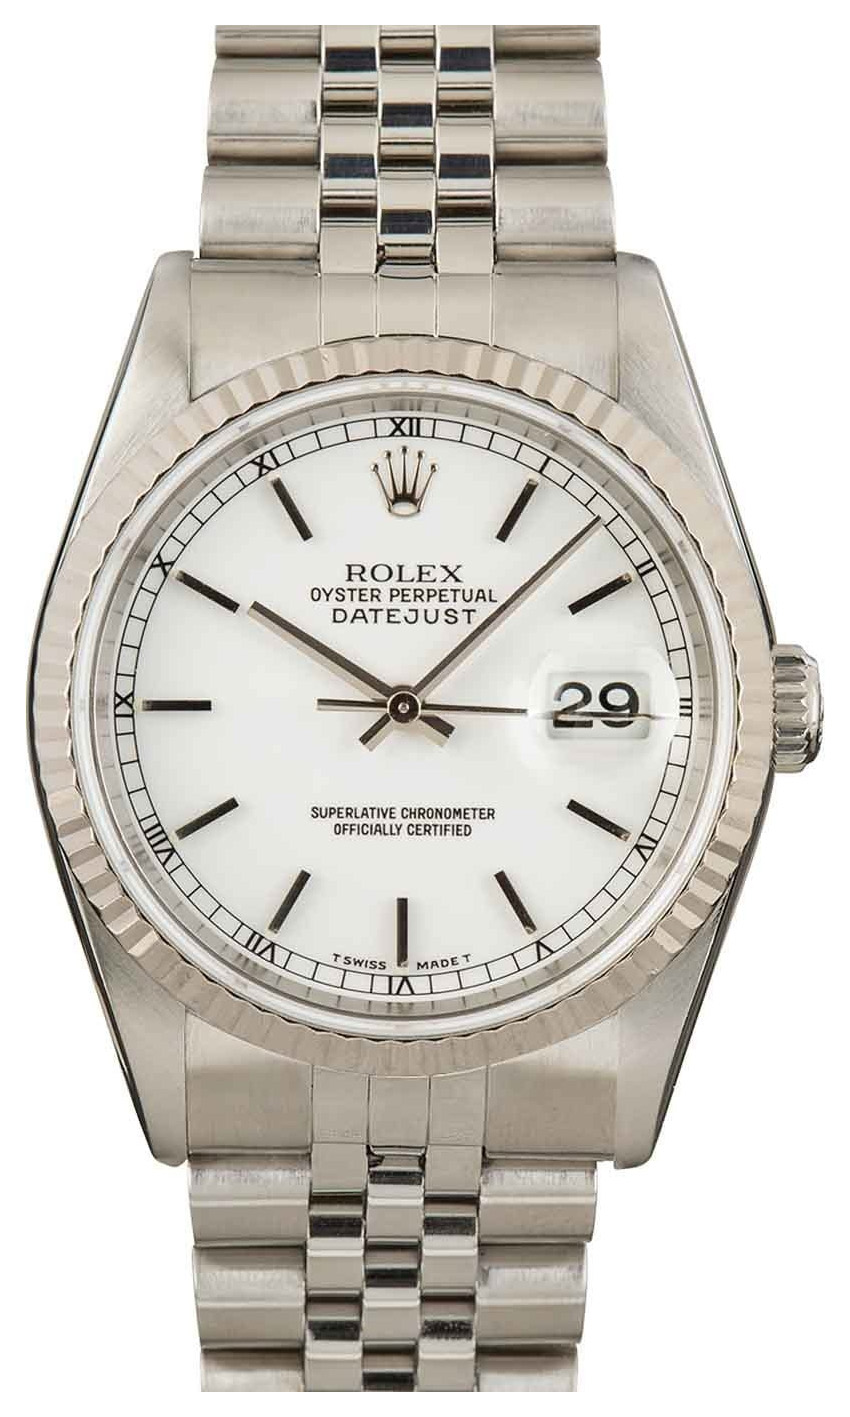 Rolex datejust 16234 white dial